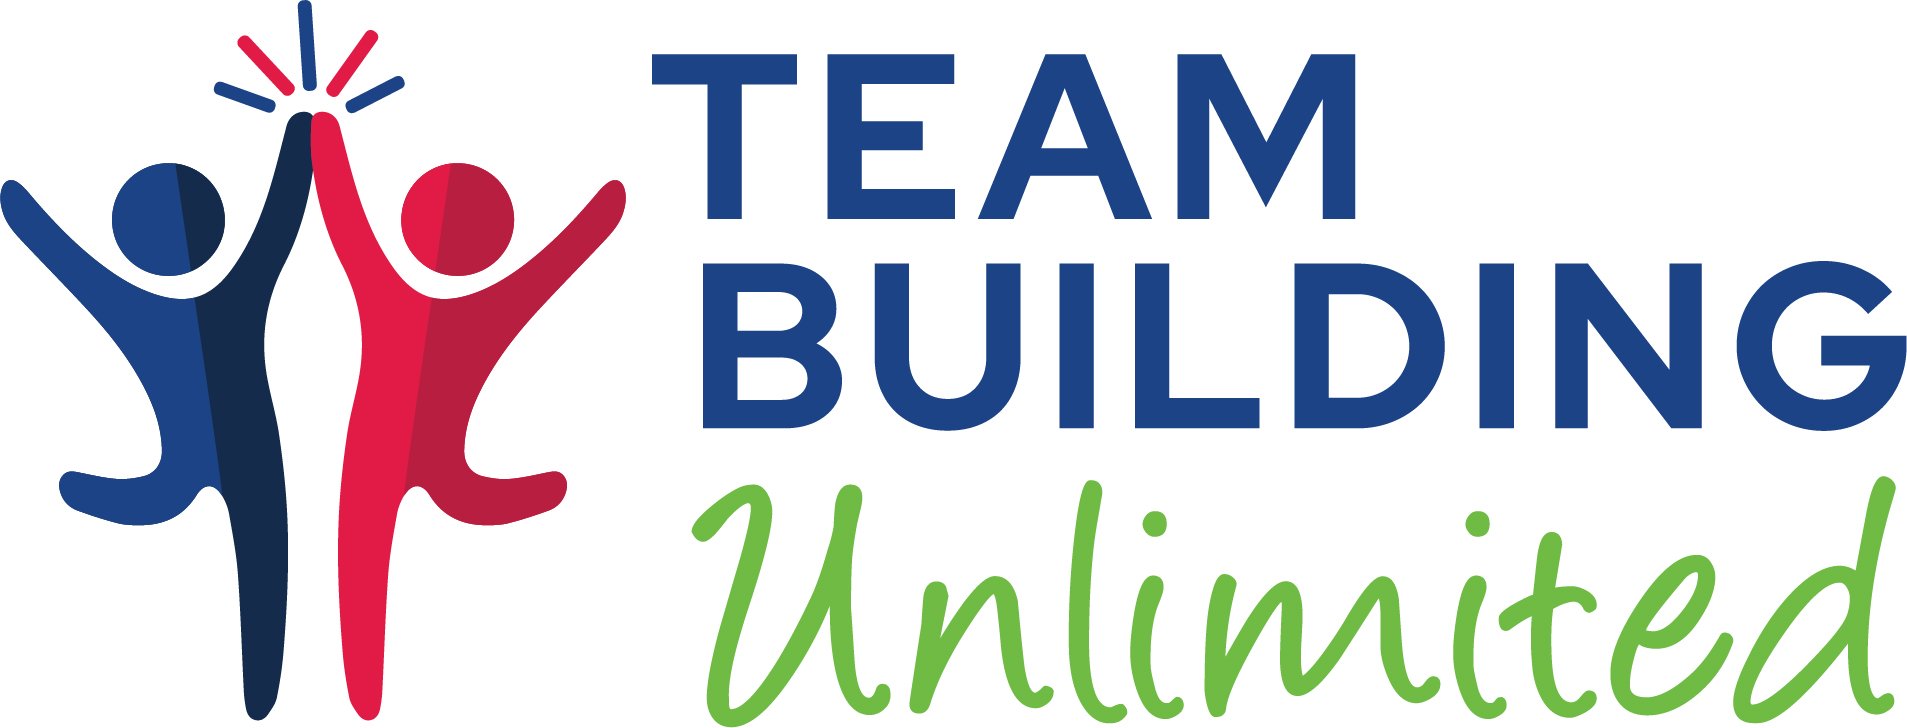 Team-Building-Unlimited-LLC-logo.jpg